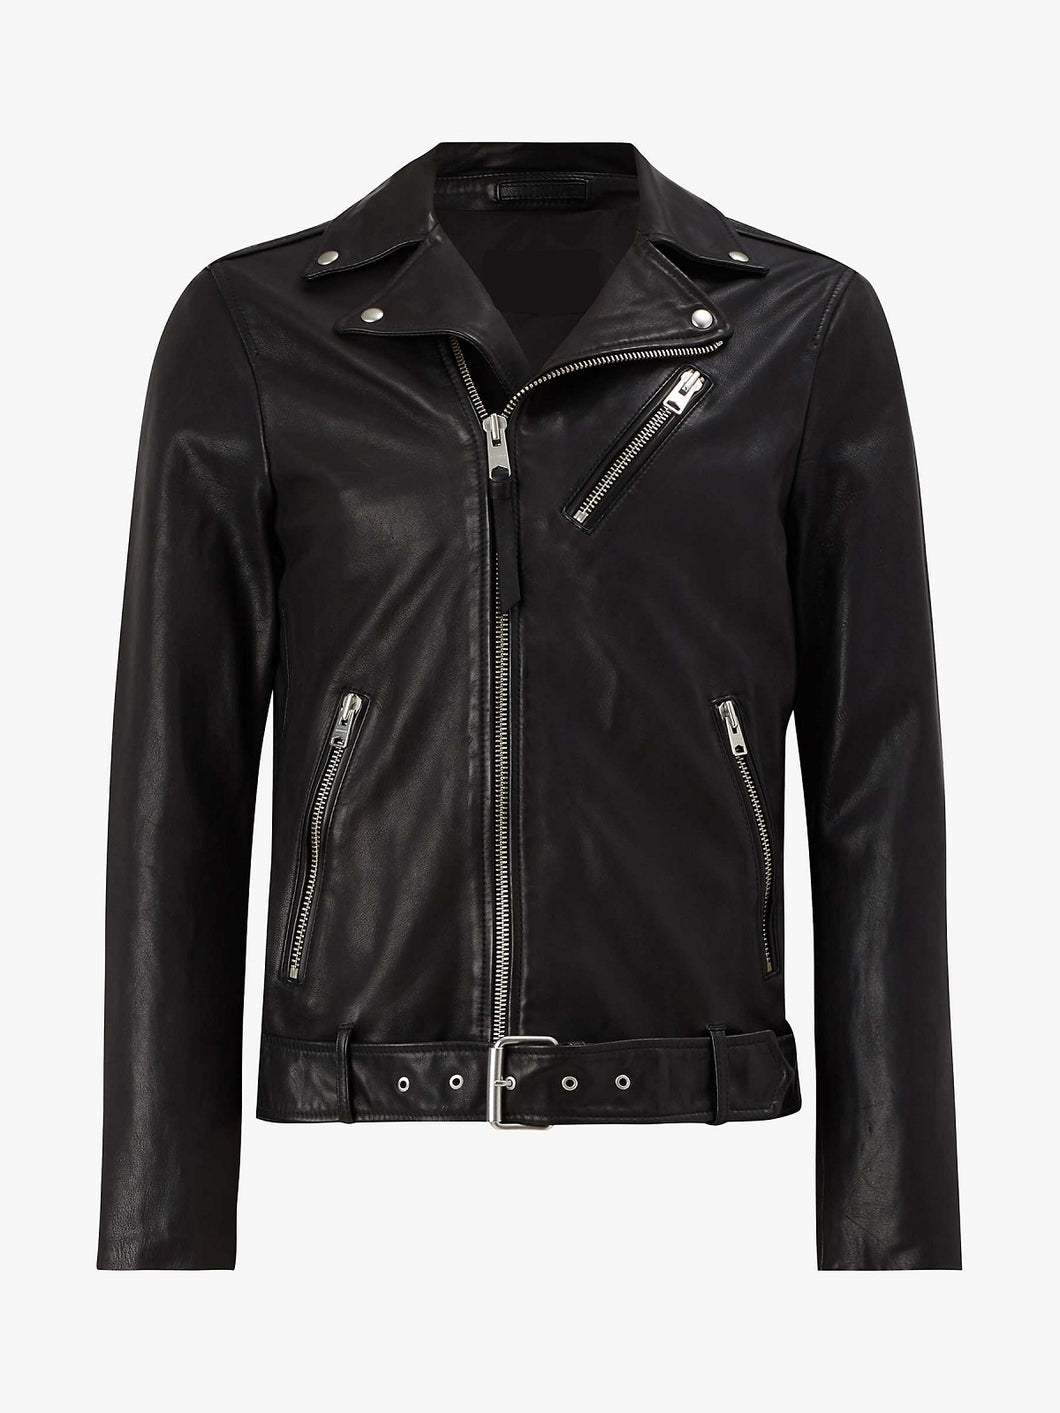 Natty Black Jacket For Men - Shearling leather